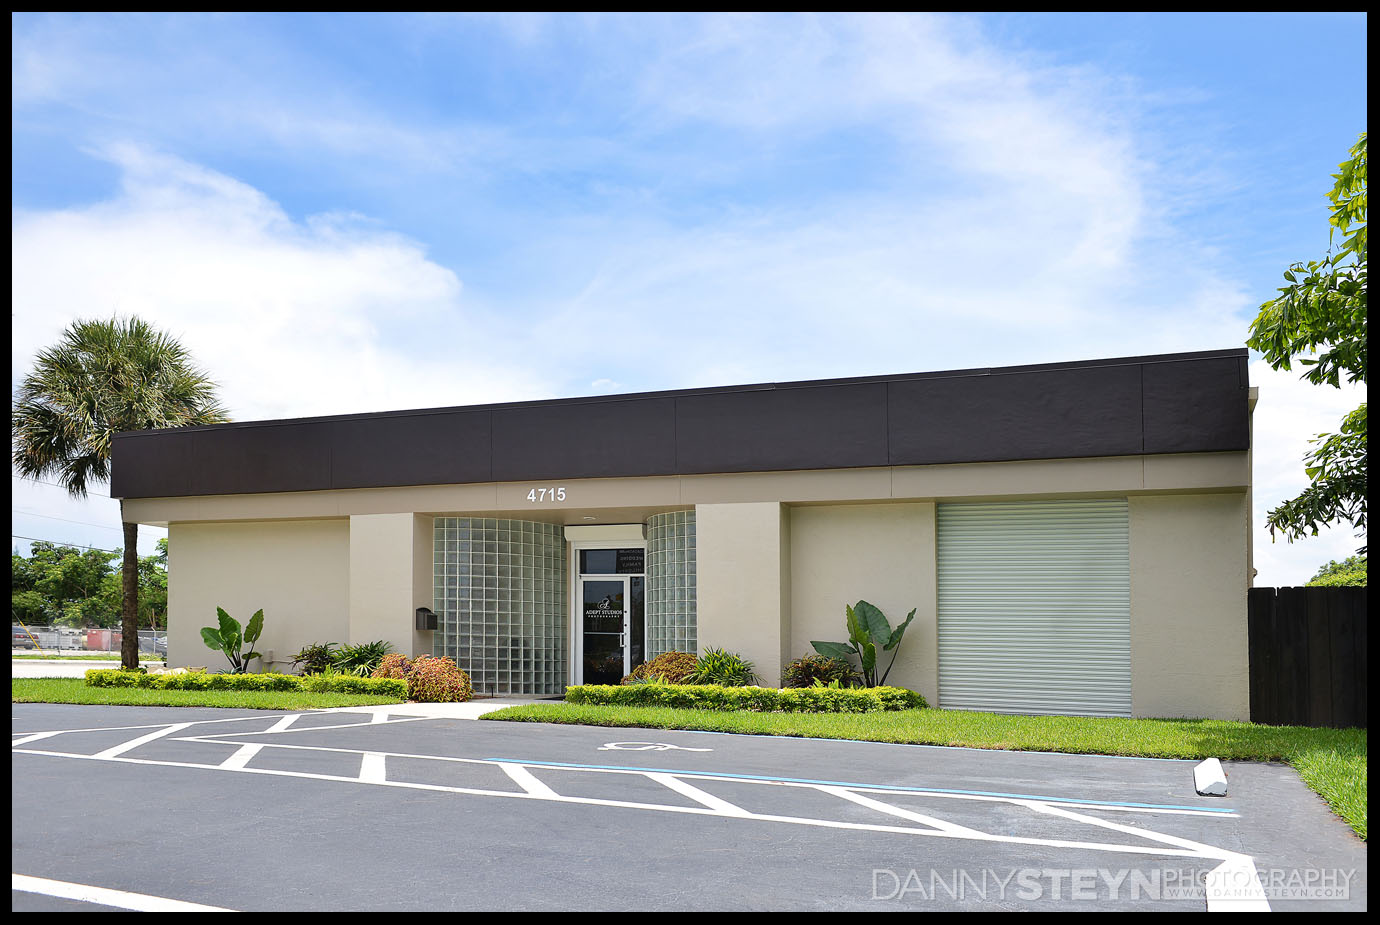 Danny Steyn Photography Studios Fort Lauderdale